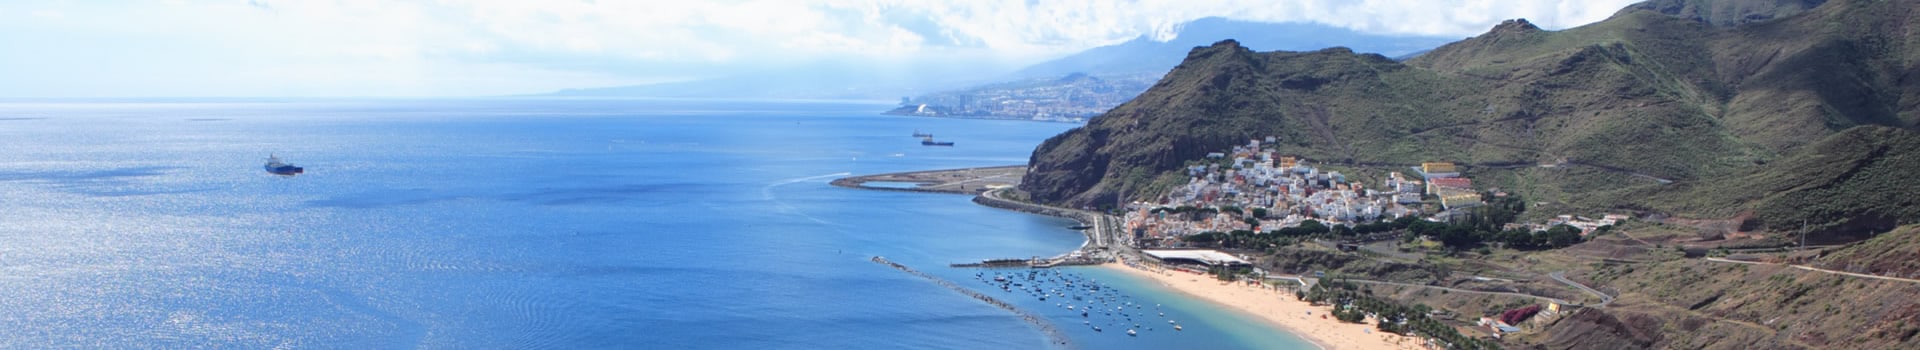 Billetes de Barco y Ferry en Tenerife